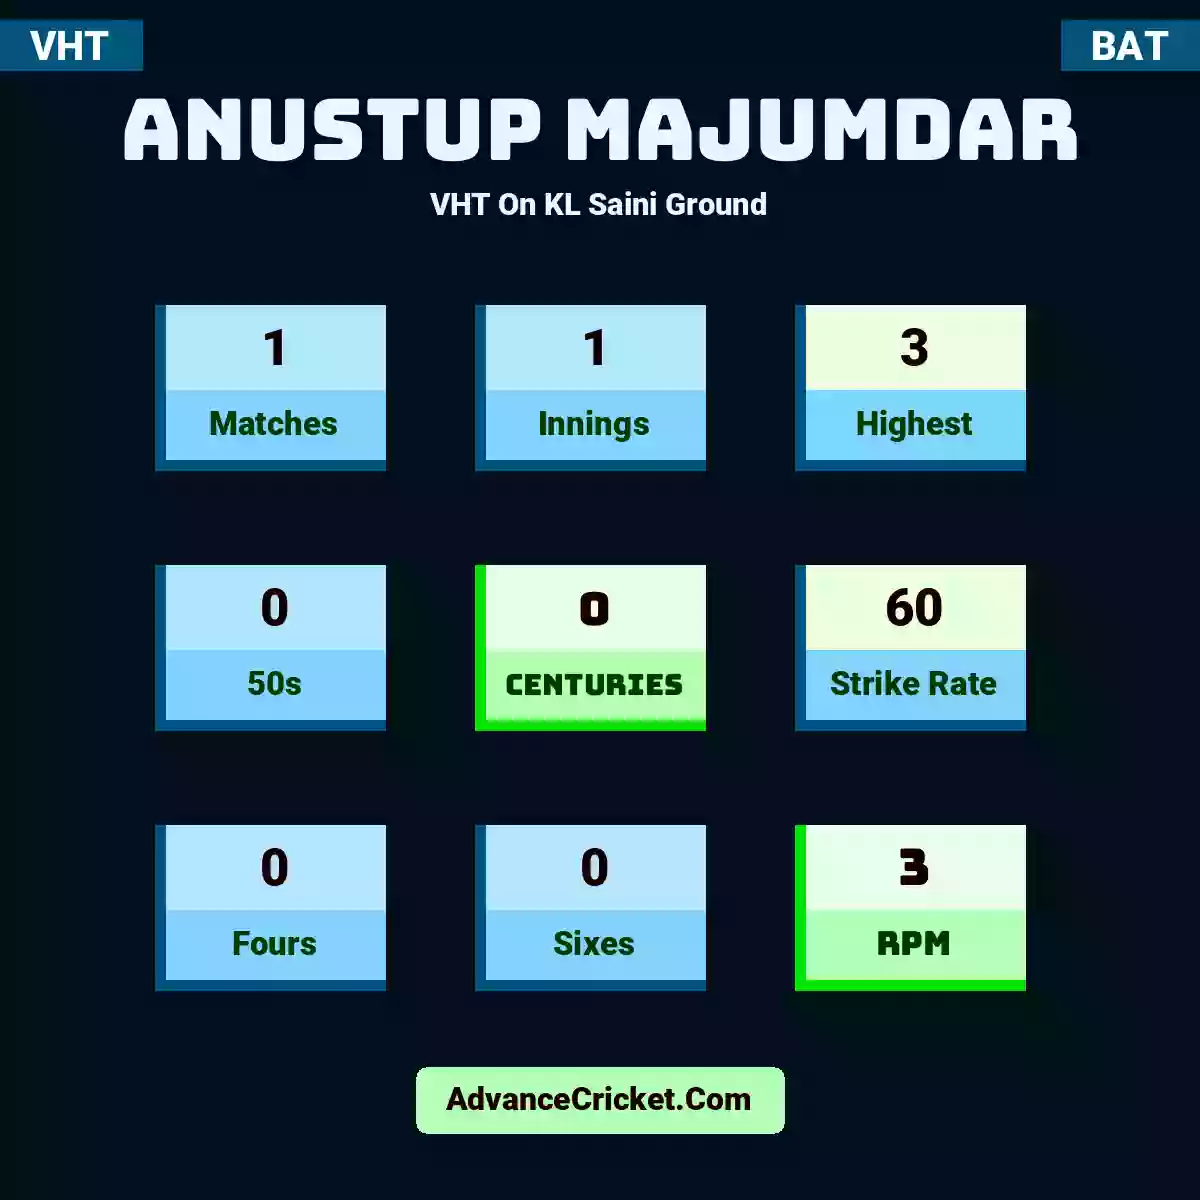 Anustup Majumdar VHT  On KL Saini Ground, Anustup Majumdar played 1 matches, scored 3 runs as highest, 0 half-centuries, and 0 centuries, with a strike rate of 60. A.Majumdar hit 0 fours and 0 sixes, with an RPM of 3.